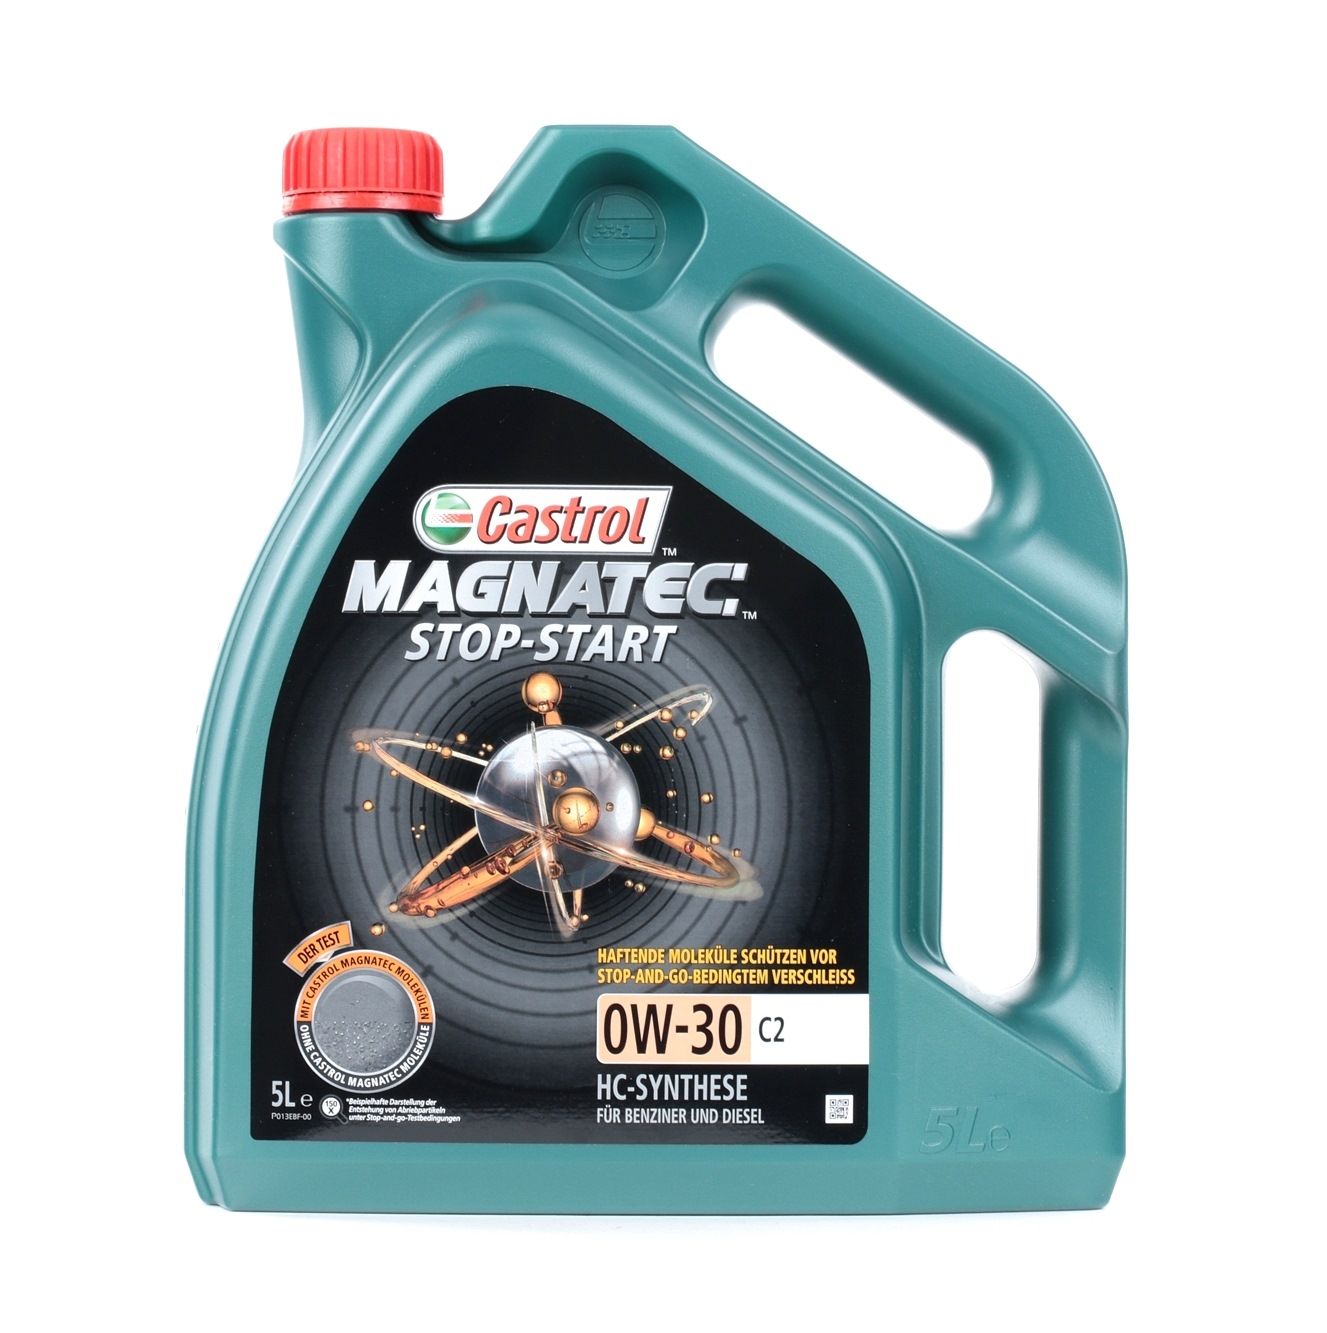 Engine Oil CASTROL Magnatec, Stop-Start C2 15B3E5 0W-30, 5l — Buy now!